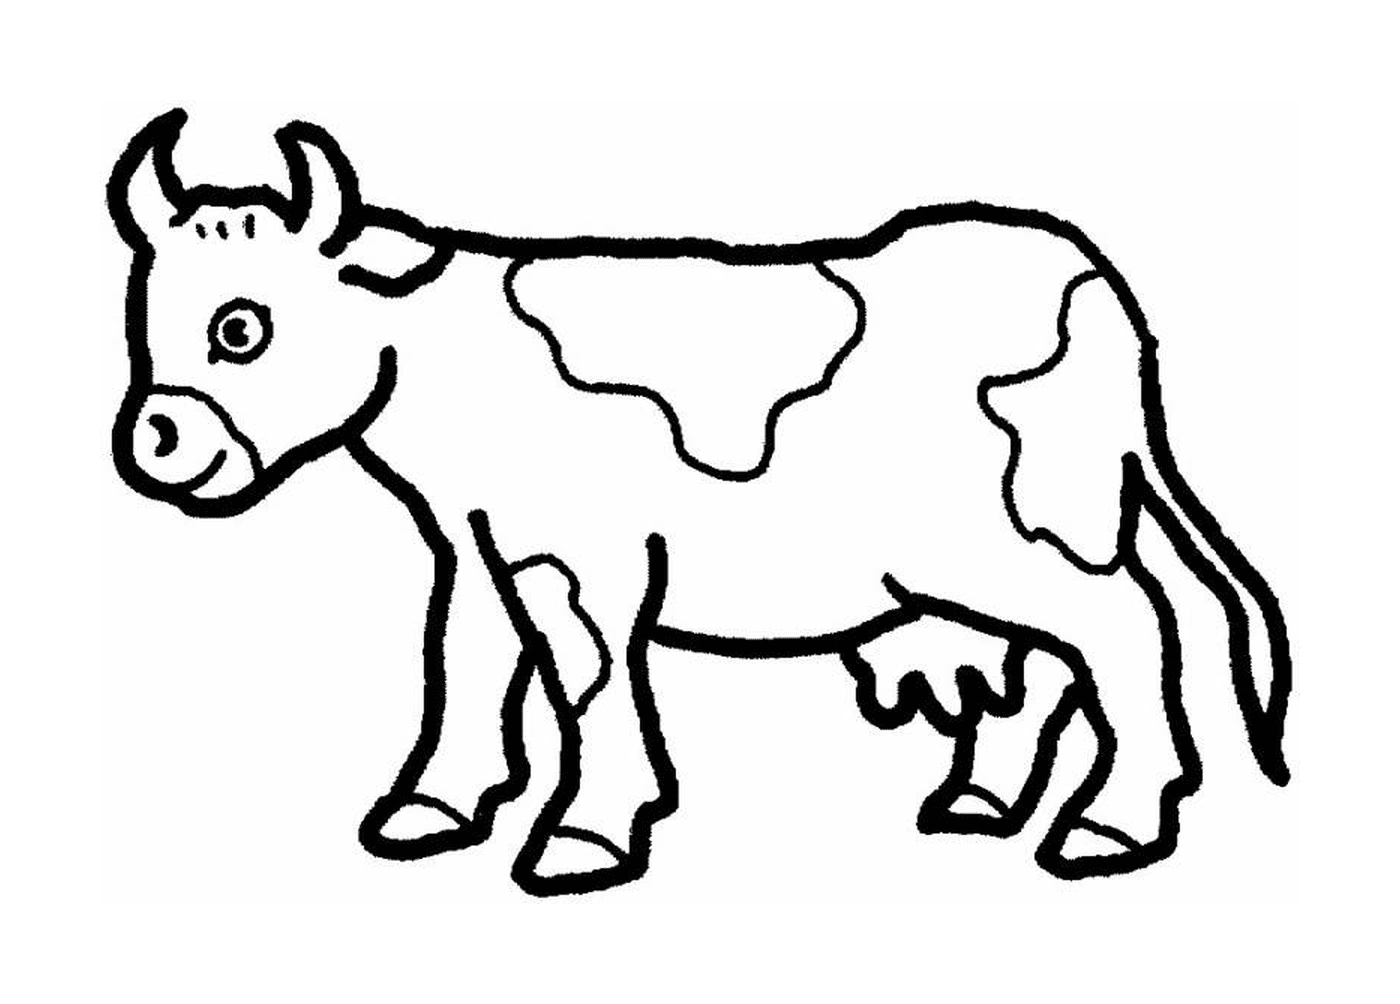  A cow 